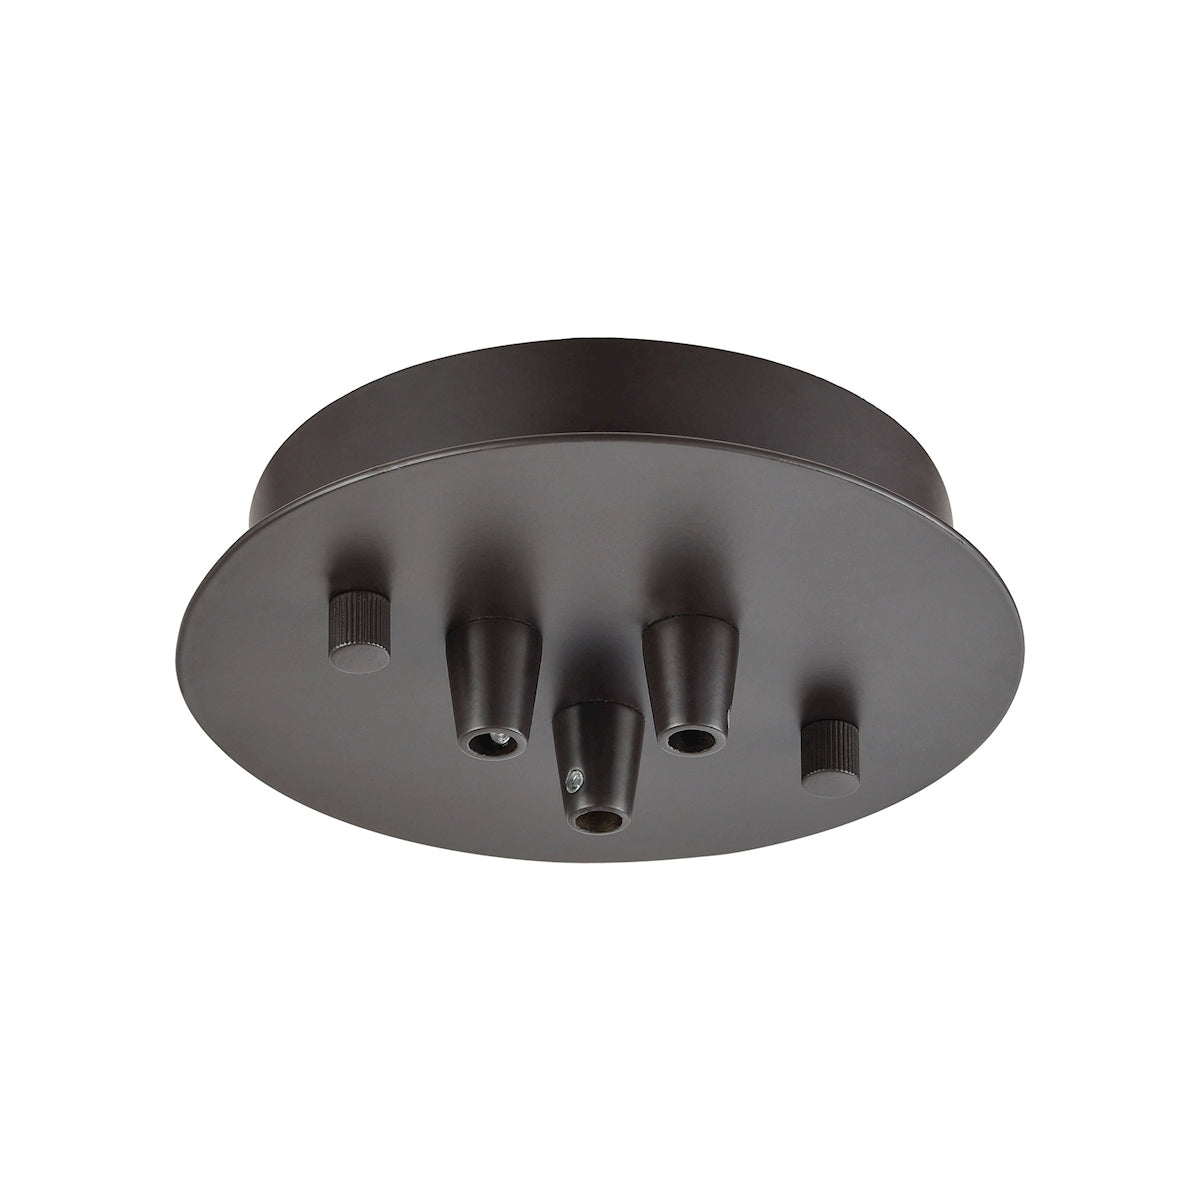 ELK Lighting 3SR-OB Pendant Options 3 Light Small Round Canopy in Oil Rubbed Bronze